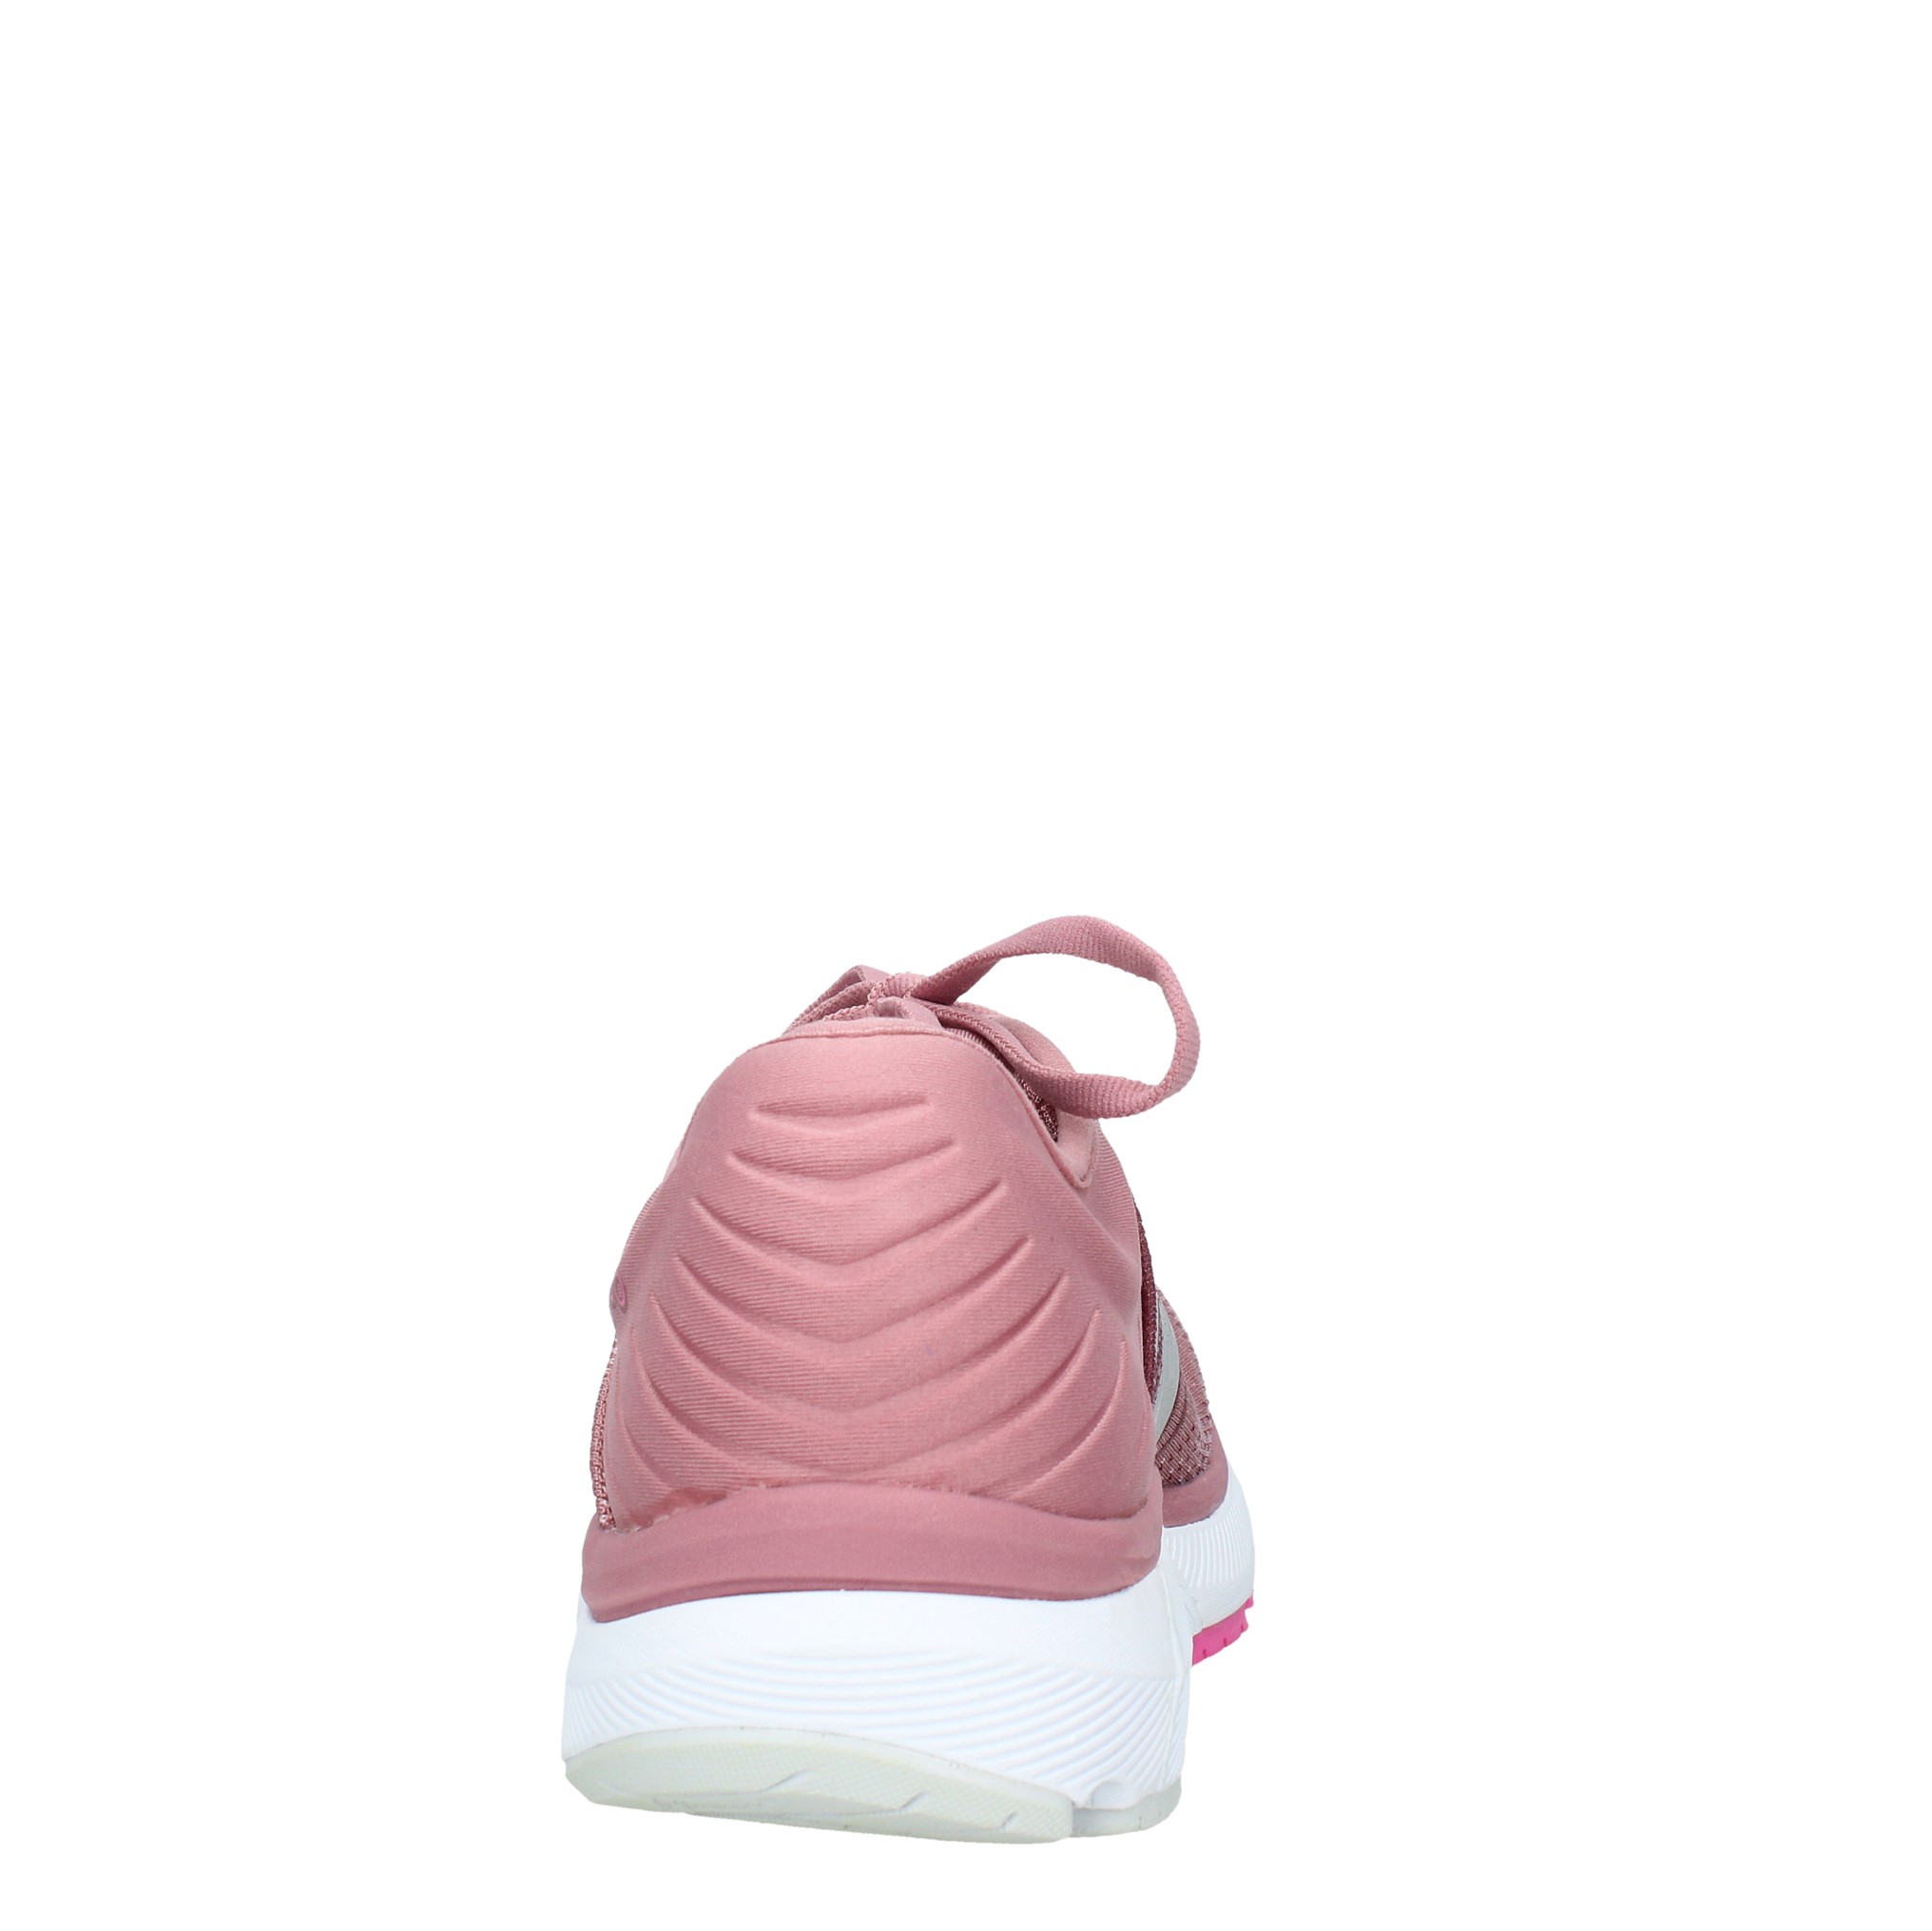 Trainers Antique Pink - NEW BALANCE - Ginevra calzature